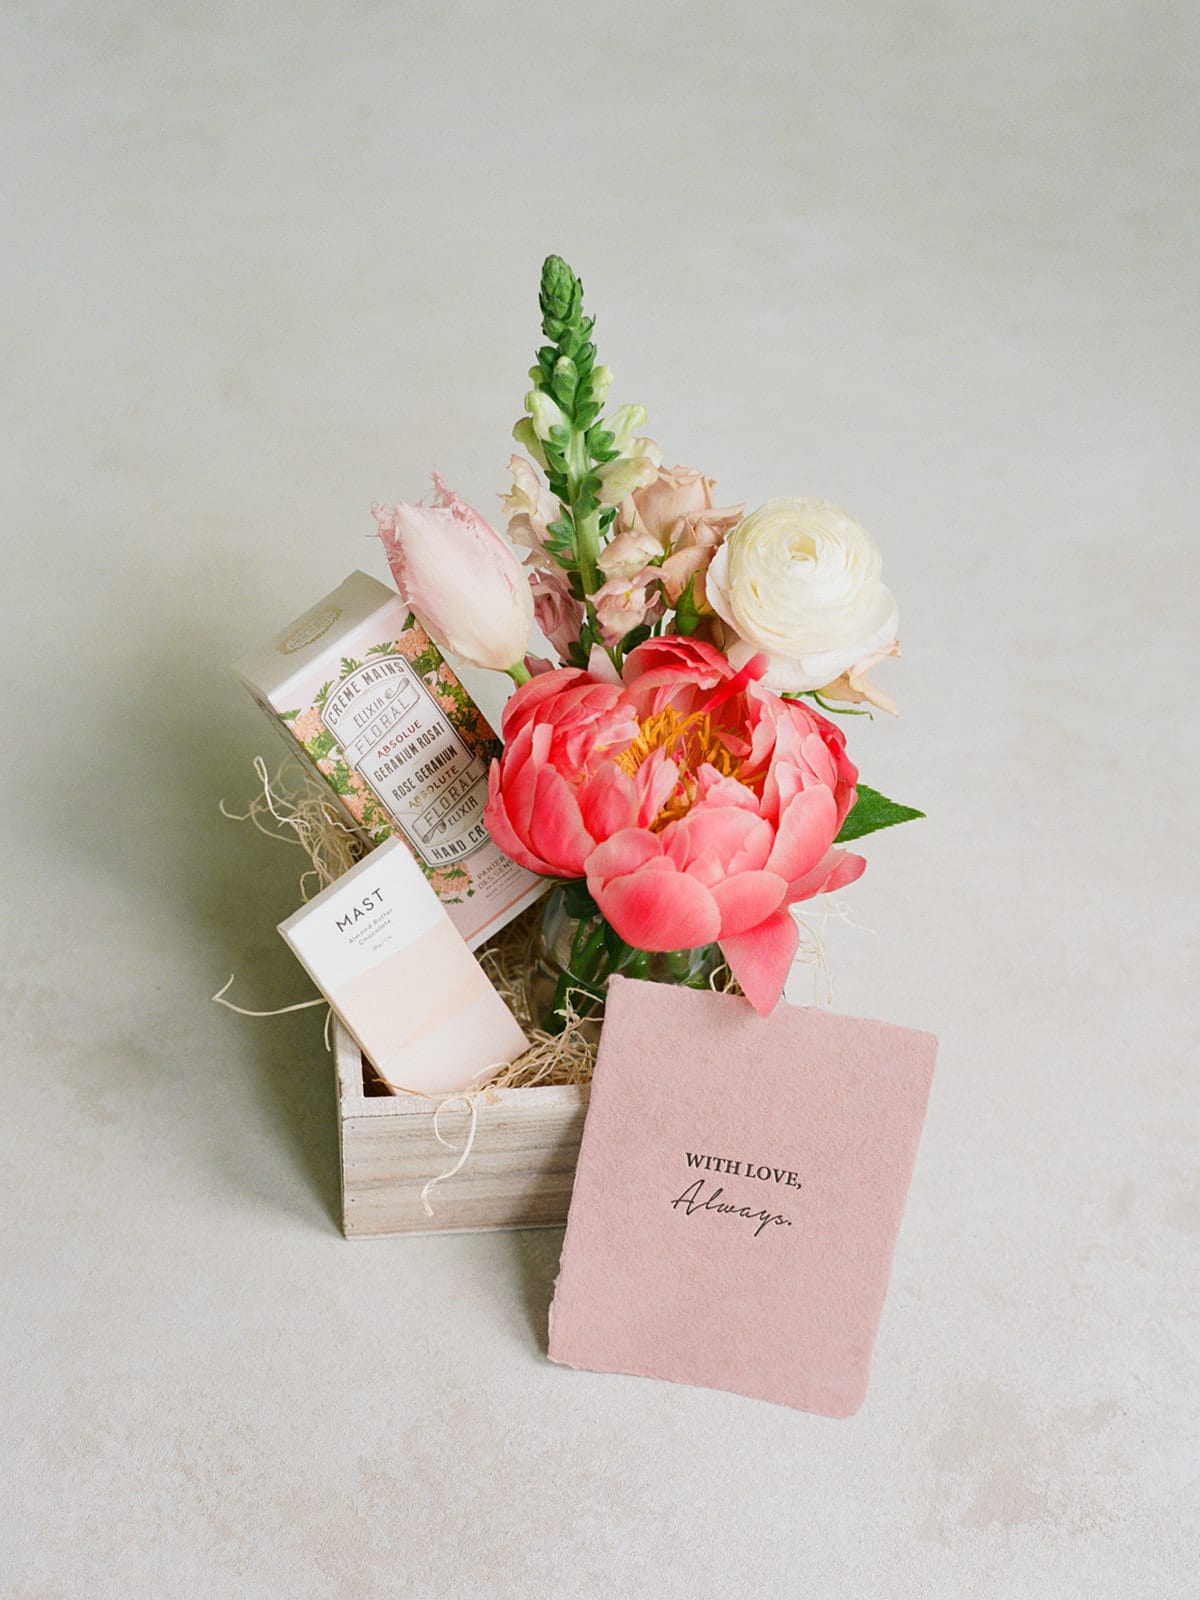 With Love, Always  - A mini seasonal arrangement, chocolate bar, Panier des Sens hand cream, a handmade card and a wooden keepsake box.  